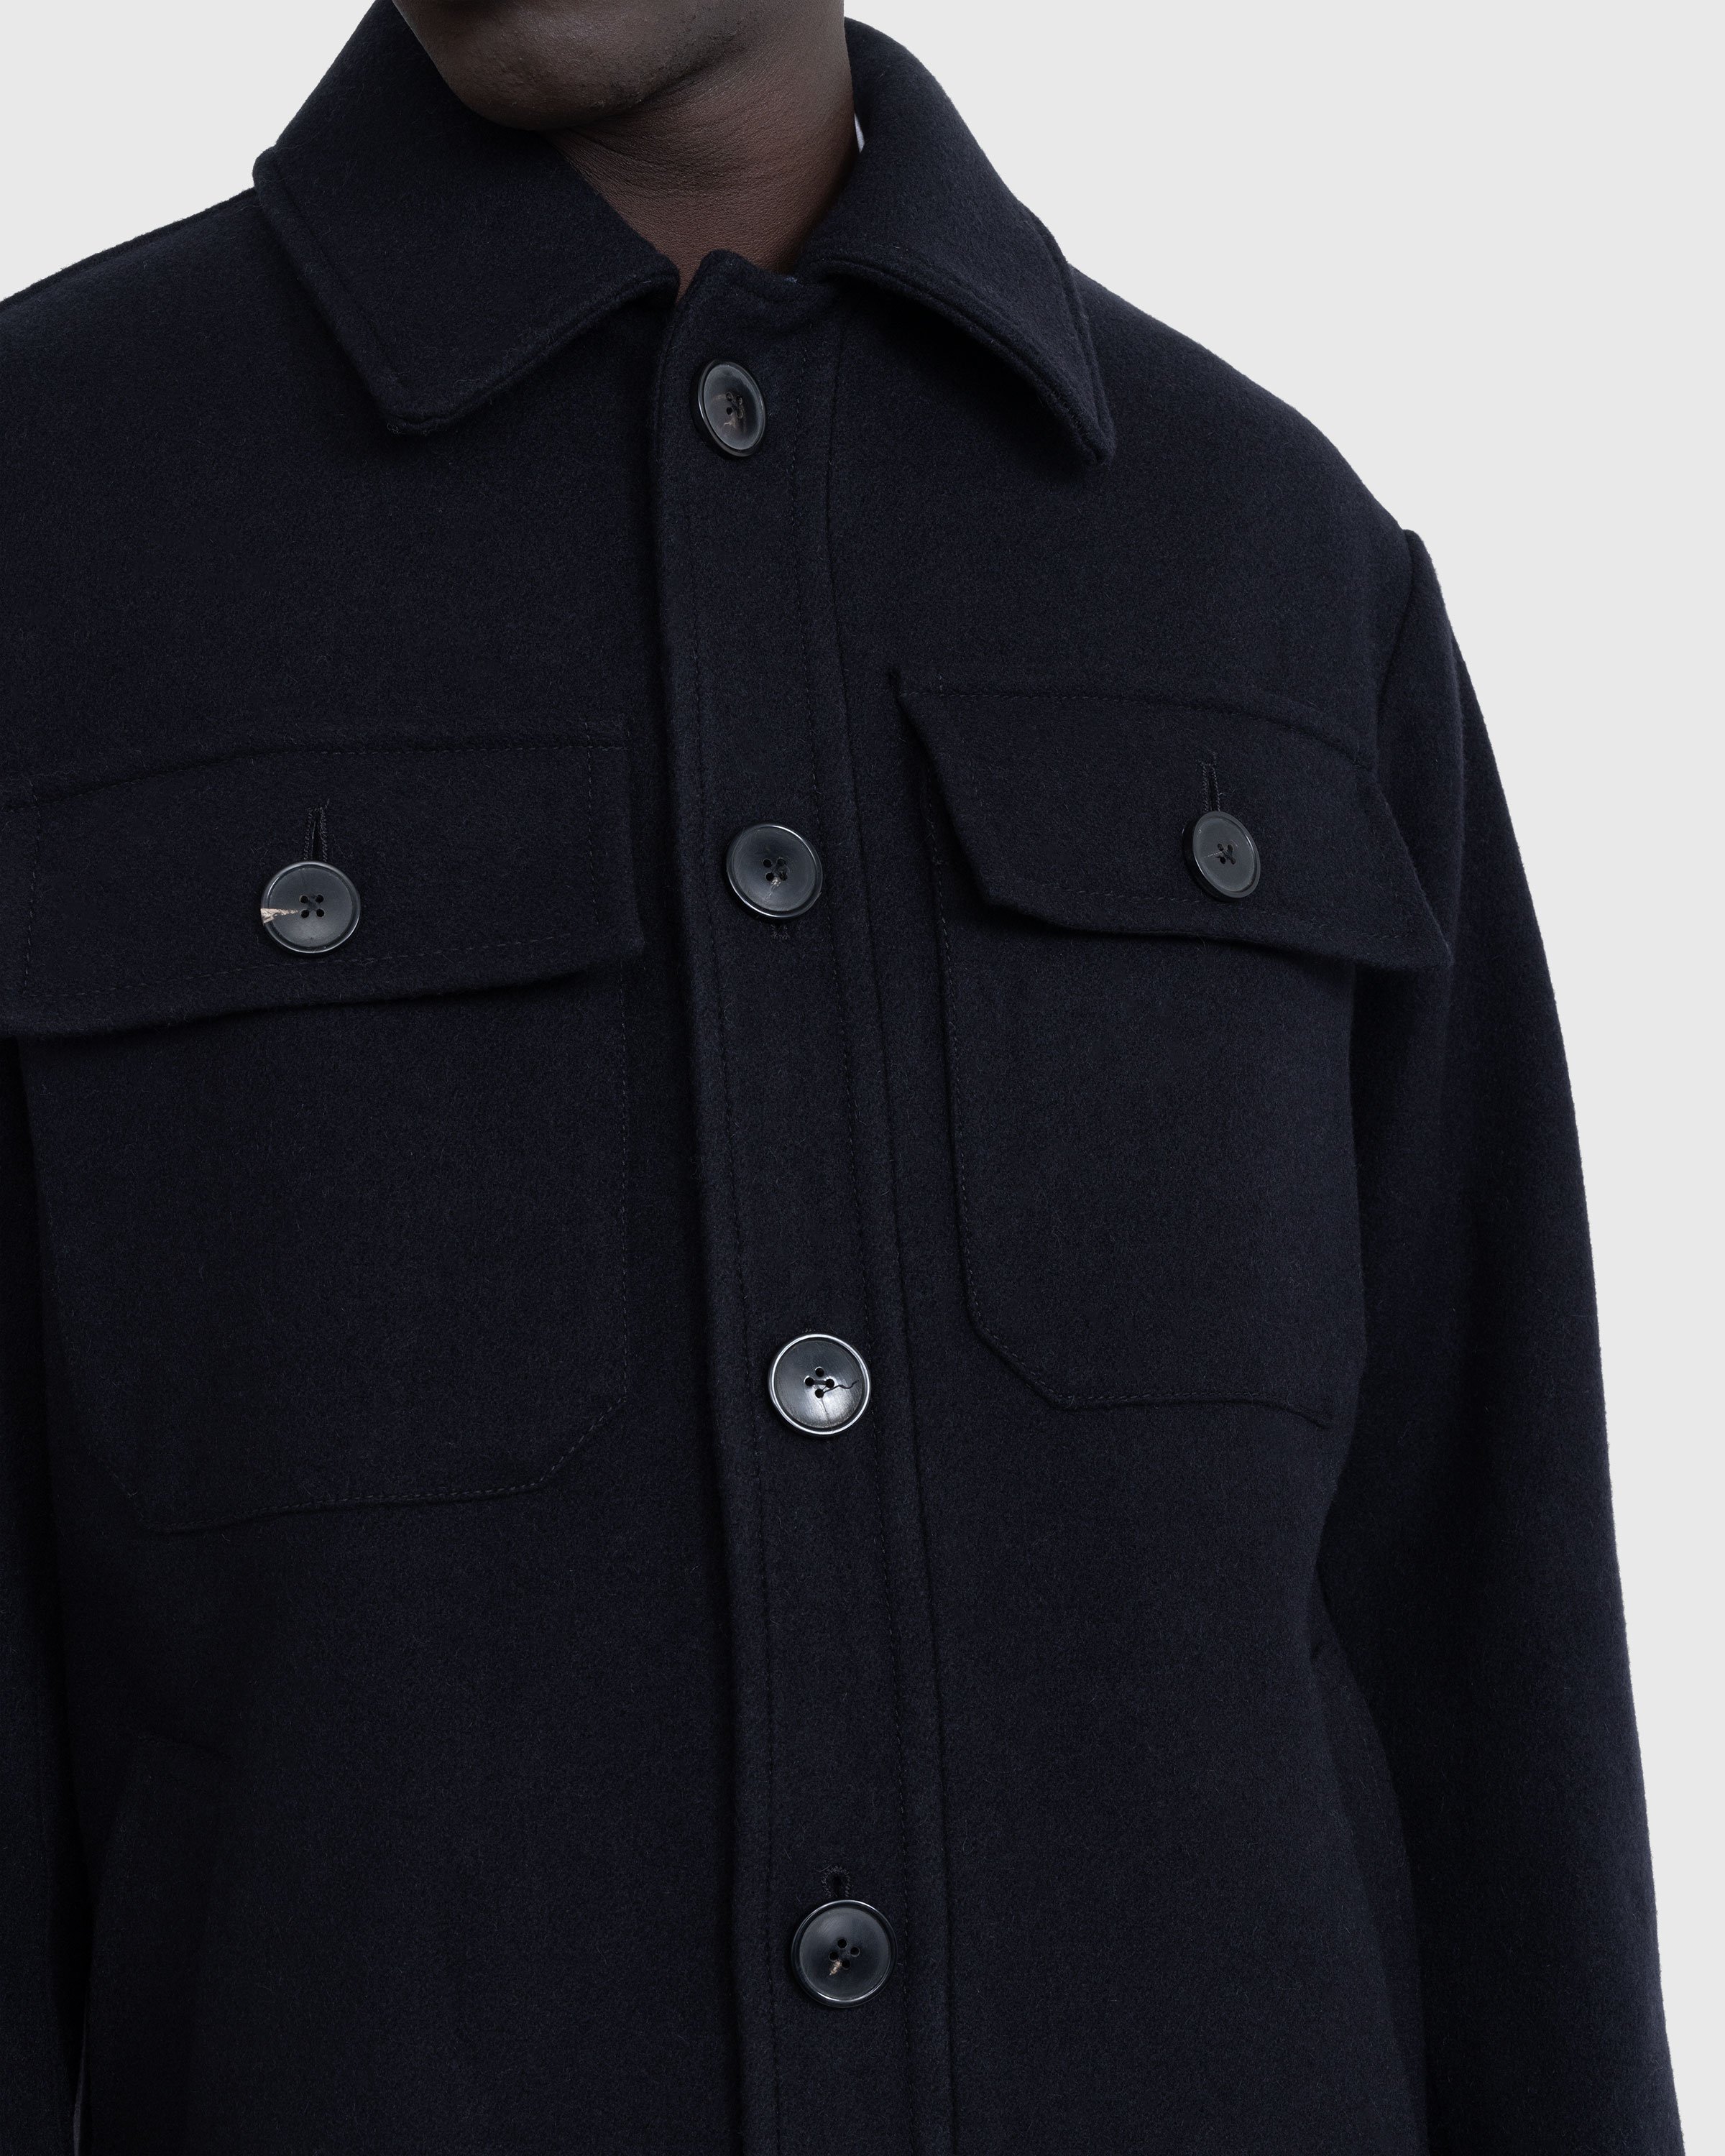 Dries van Noten - Valko Jacket Black - Clothing - Black - Image 6